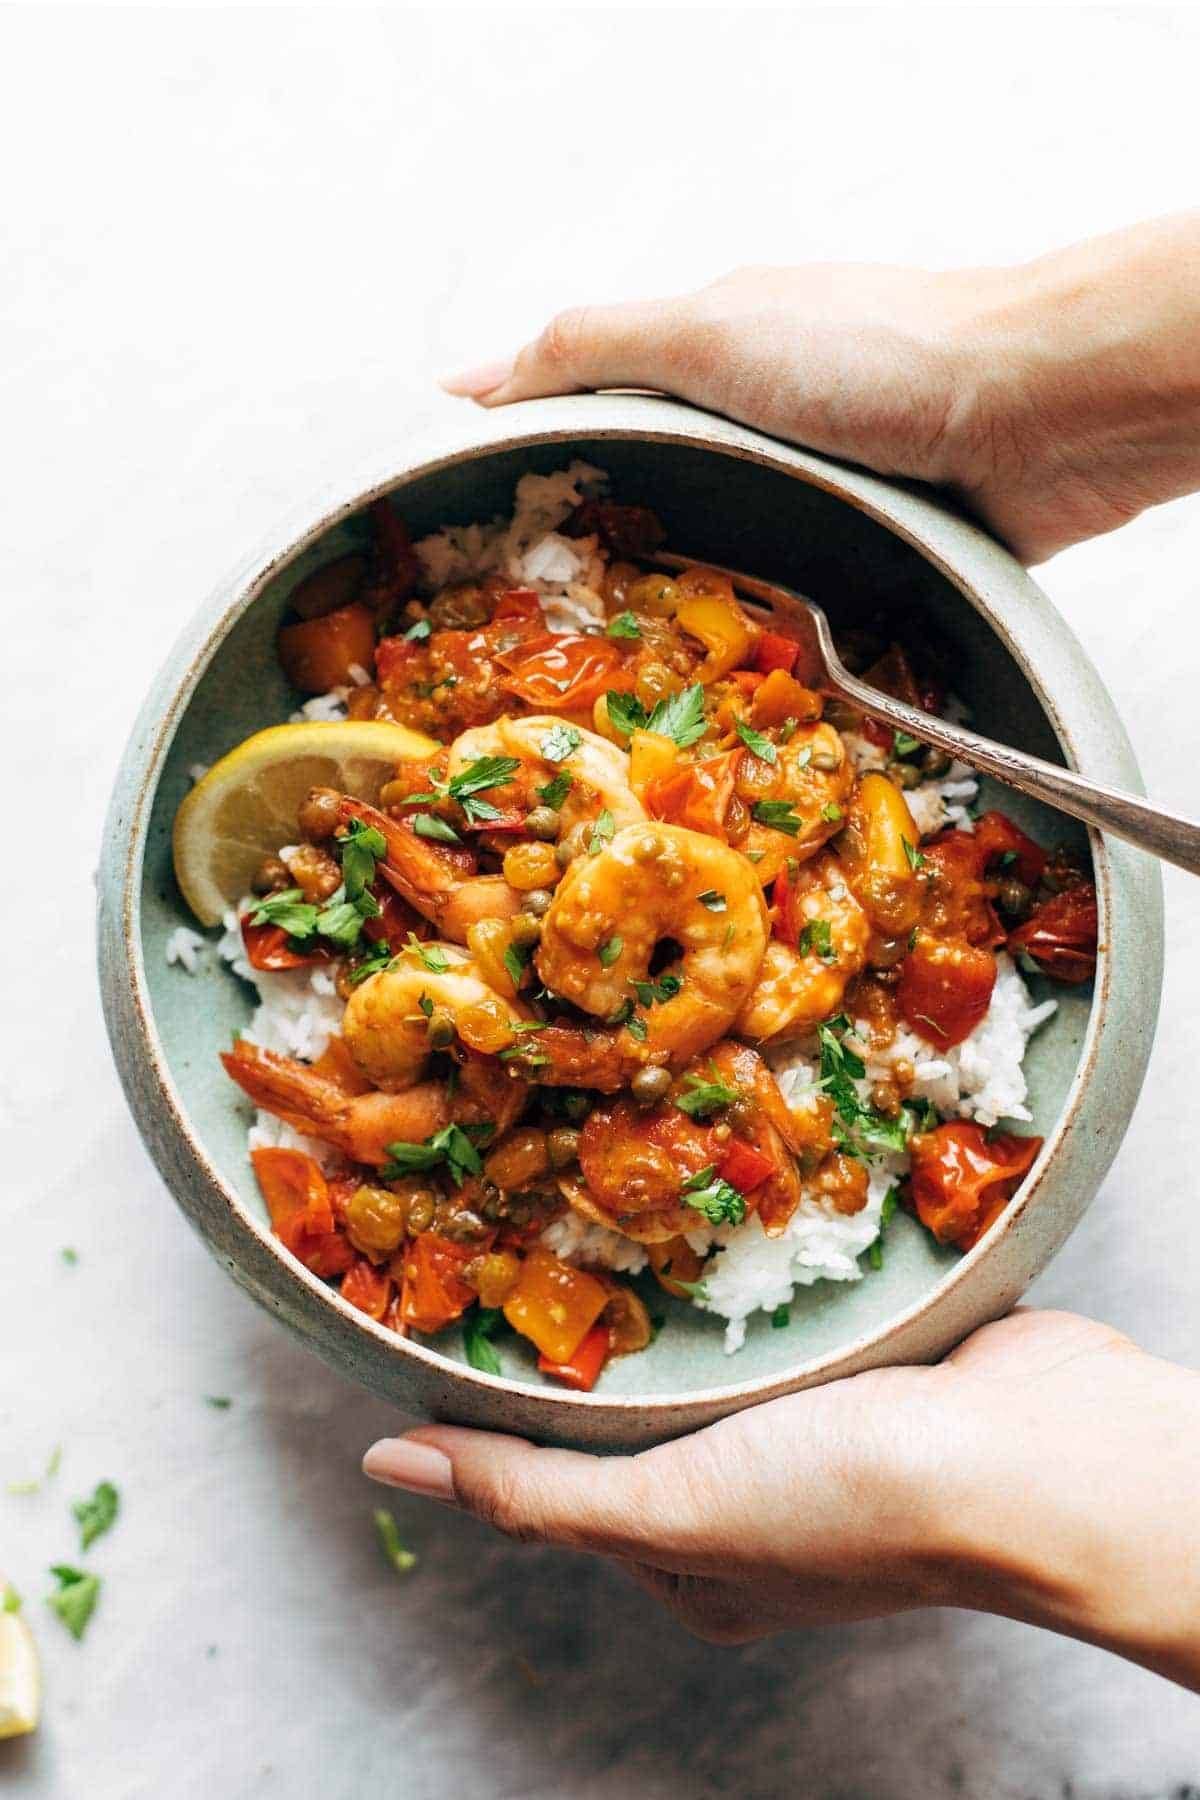 Spicy shrimp veracruz in a bowl with rice.